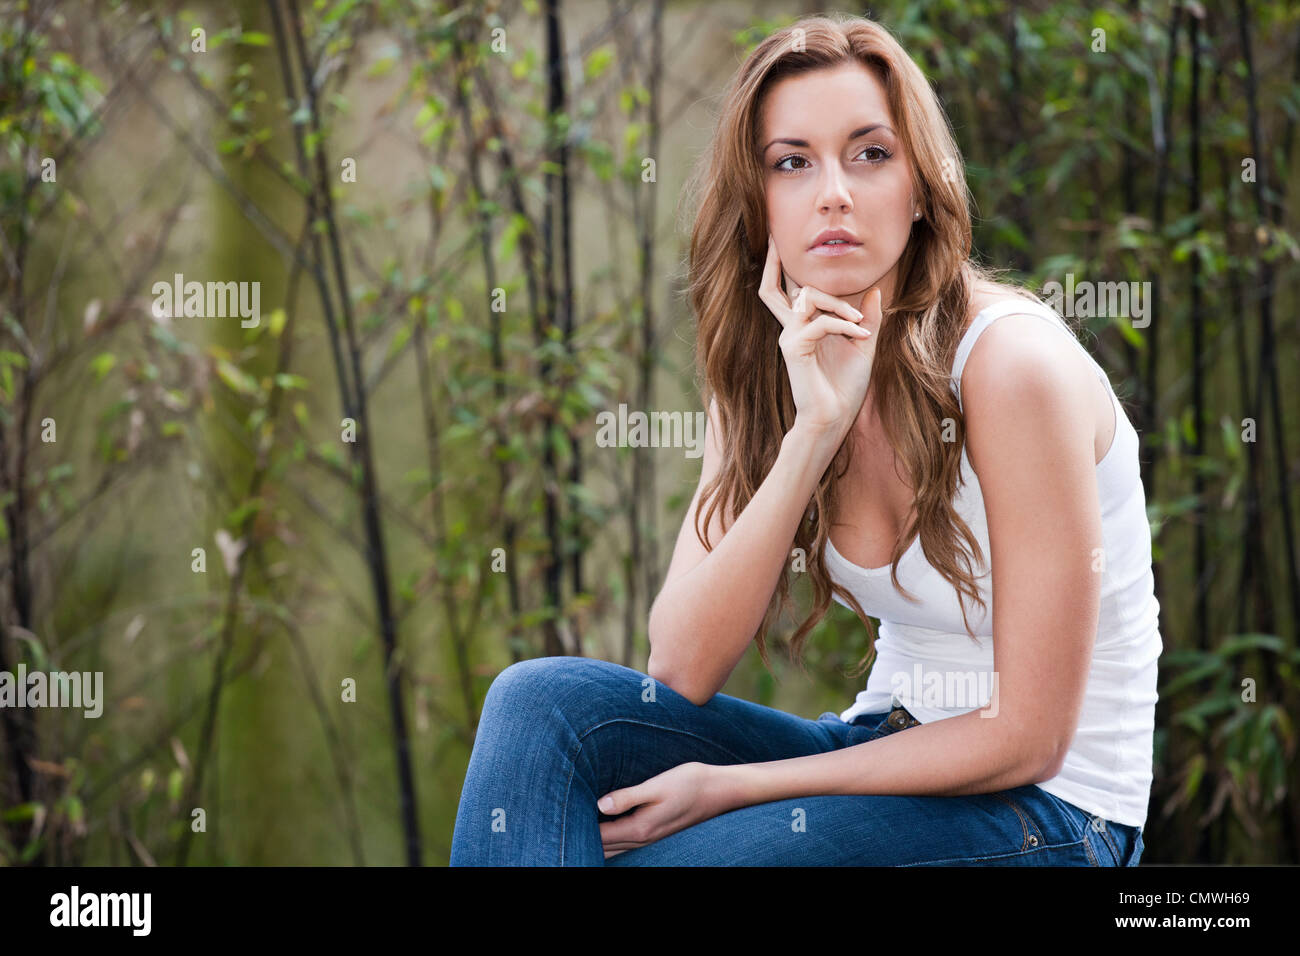 Woman thinking portrait Stock Photo